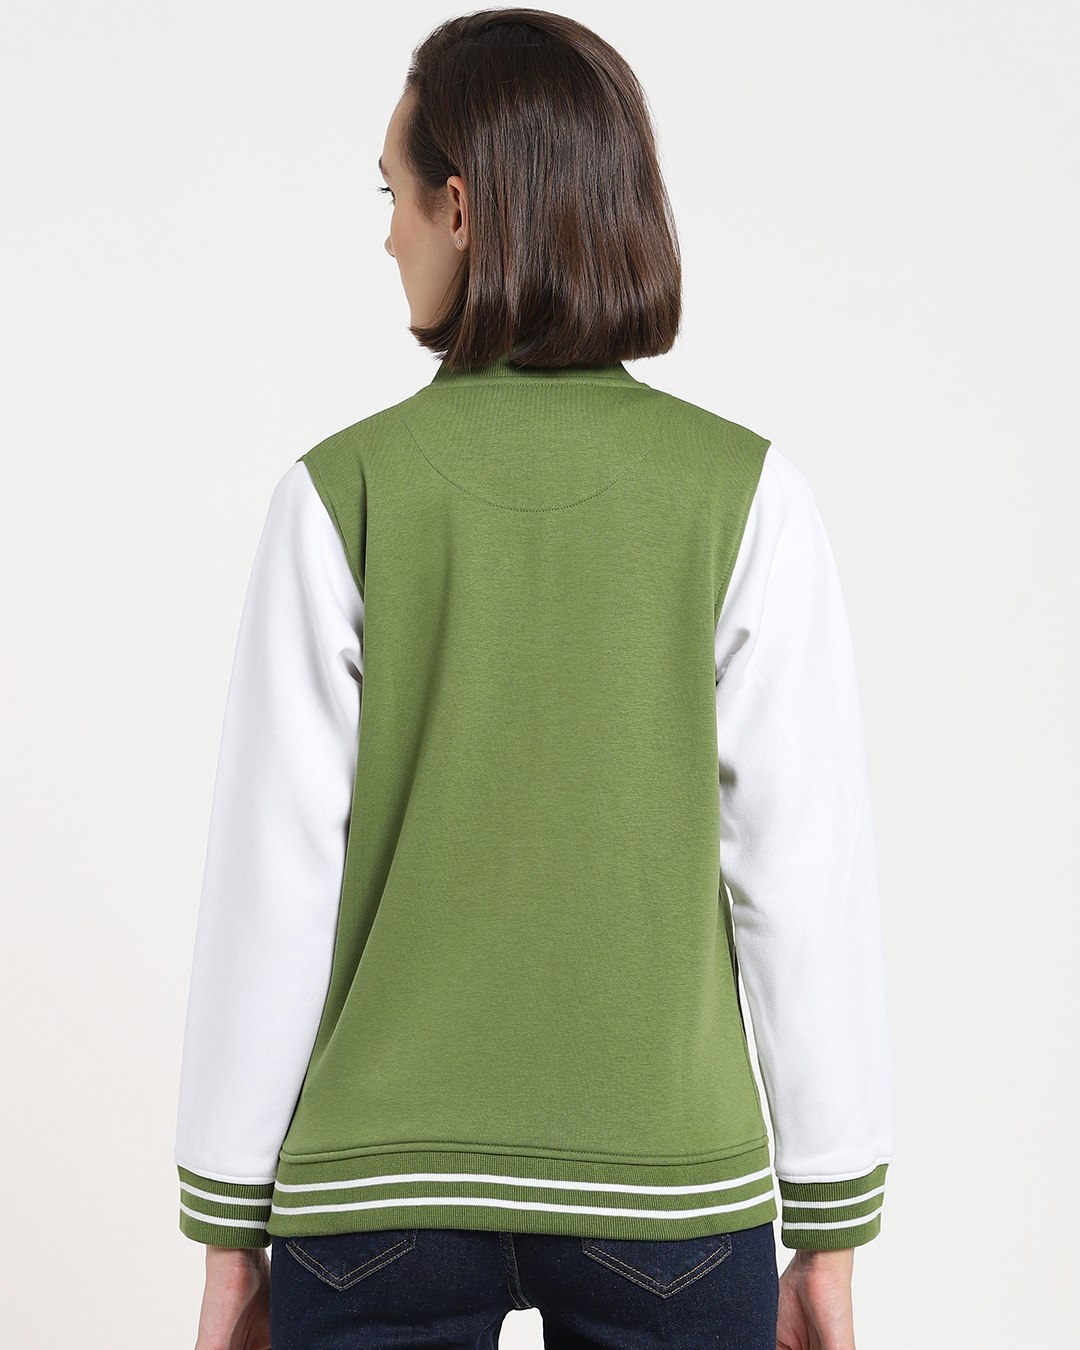 Bewakoof Women's Green & White Color Block Varsity Bomber Jacket Green-White XS